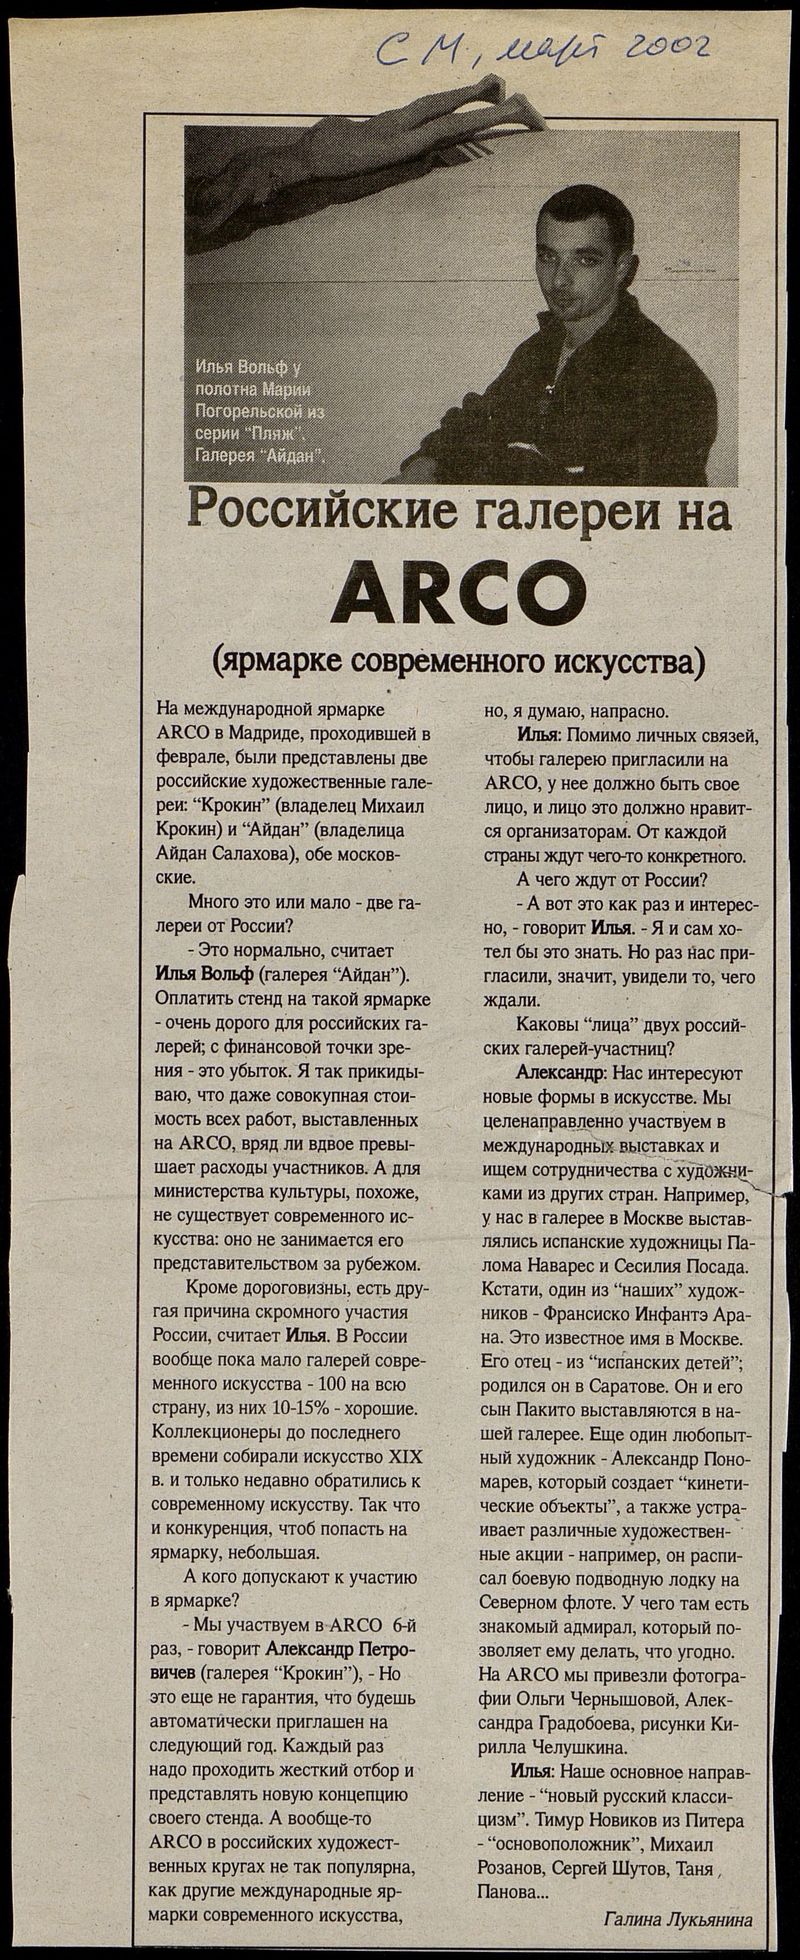 Российские галереи на ARCO